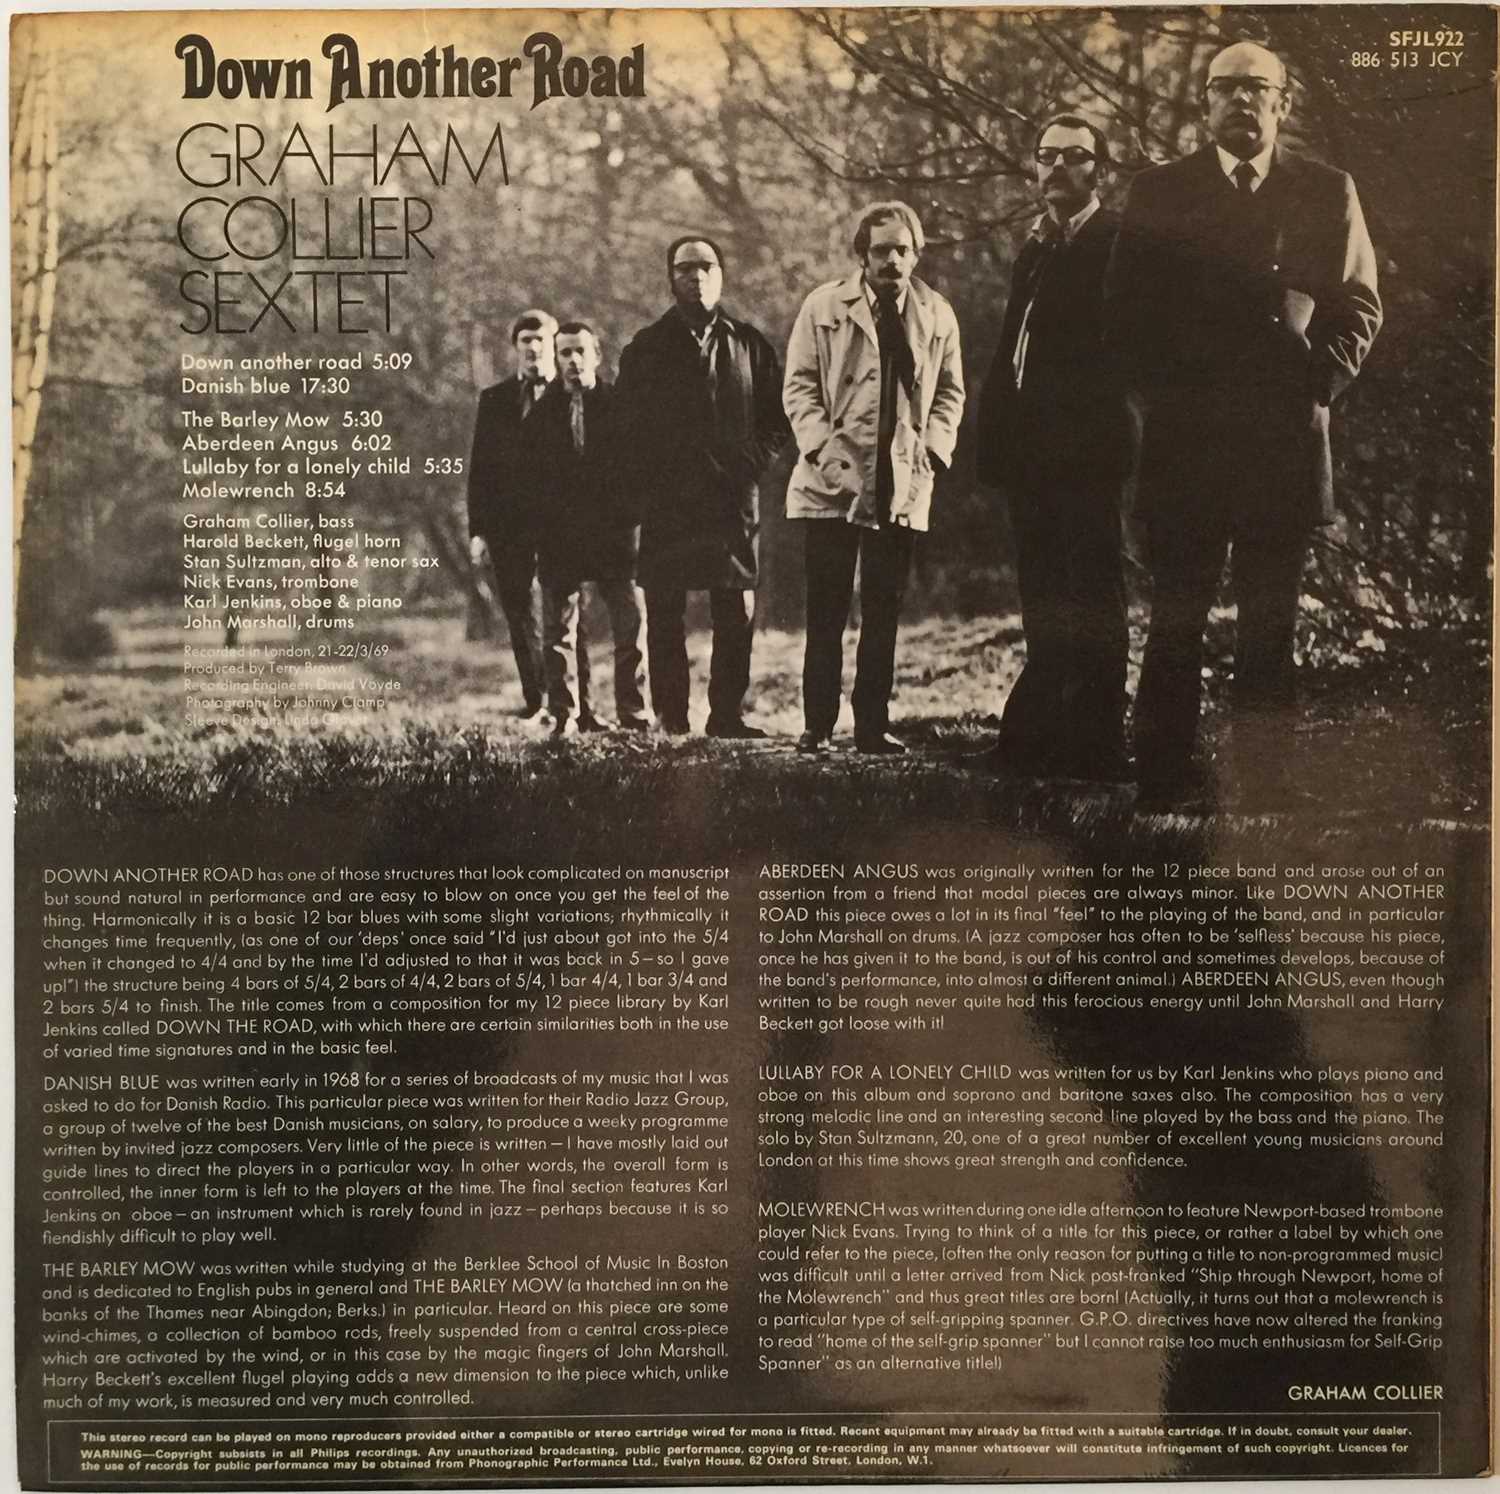 Graham Collier Sextet - Down Another Road LP (Original UK Release - Fontana SFJL 922) - Image 2 of 4